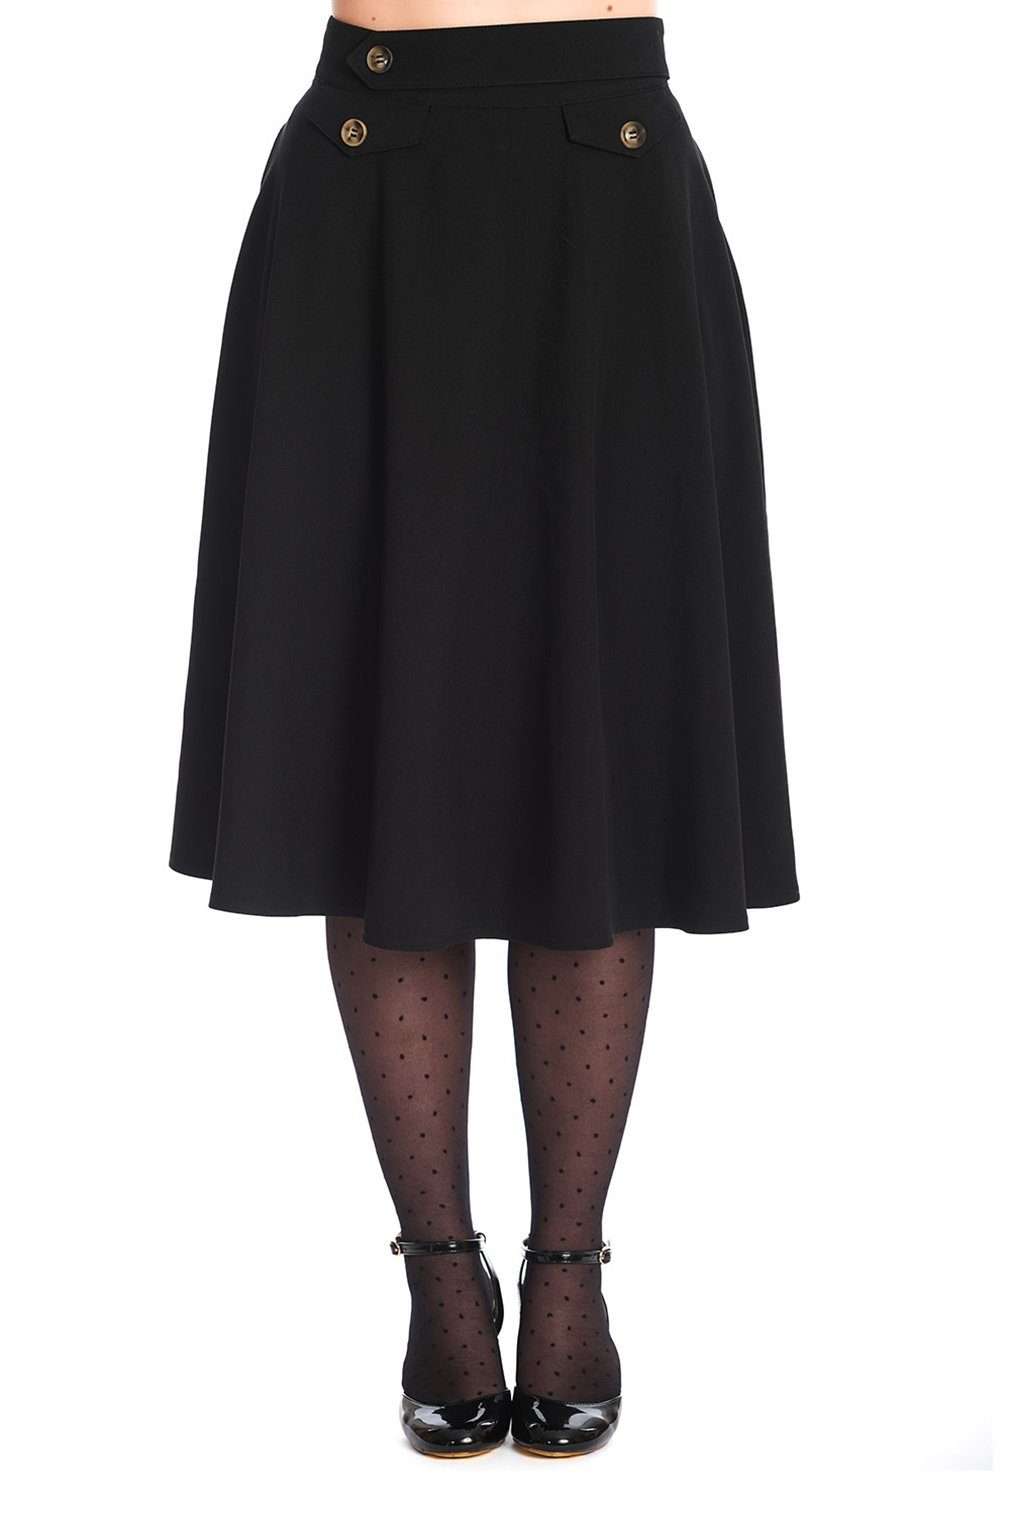 Юбка-трапеция Book Club Черная винтажная распашная юбка в стиле ретро